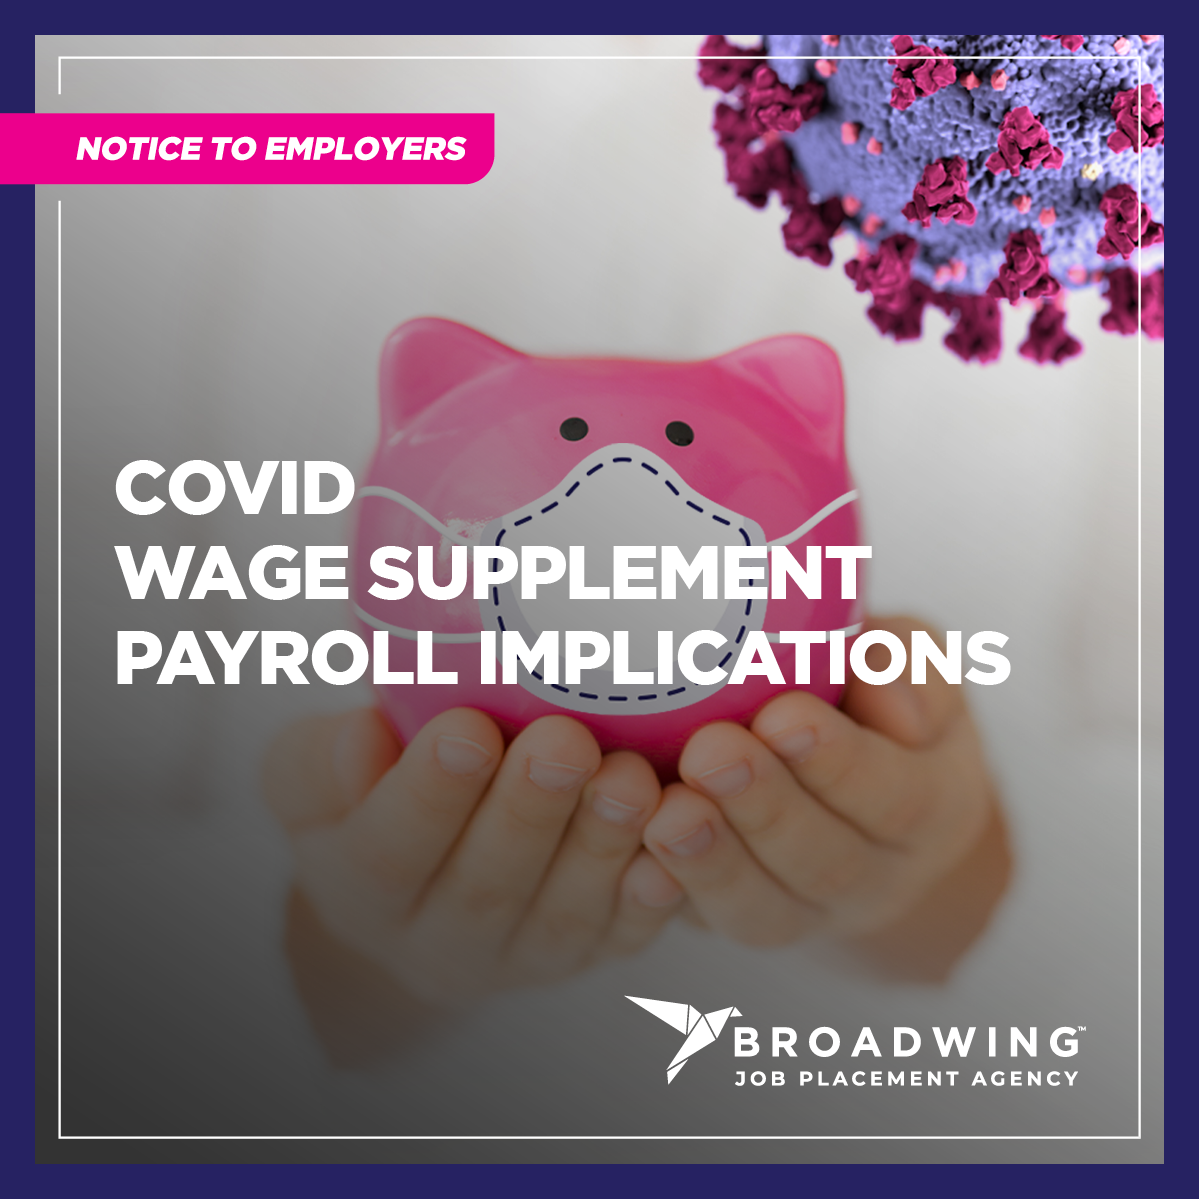 Malta COVID Wage Supplement Payroll Implications - Broadwing HR Advice